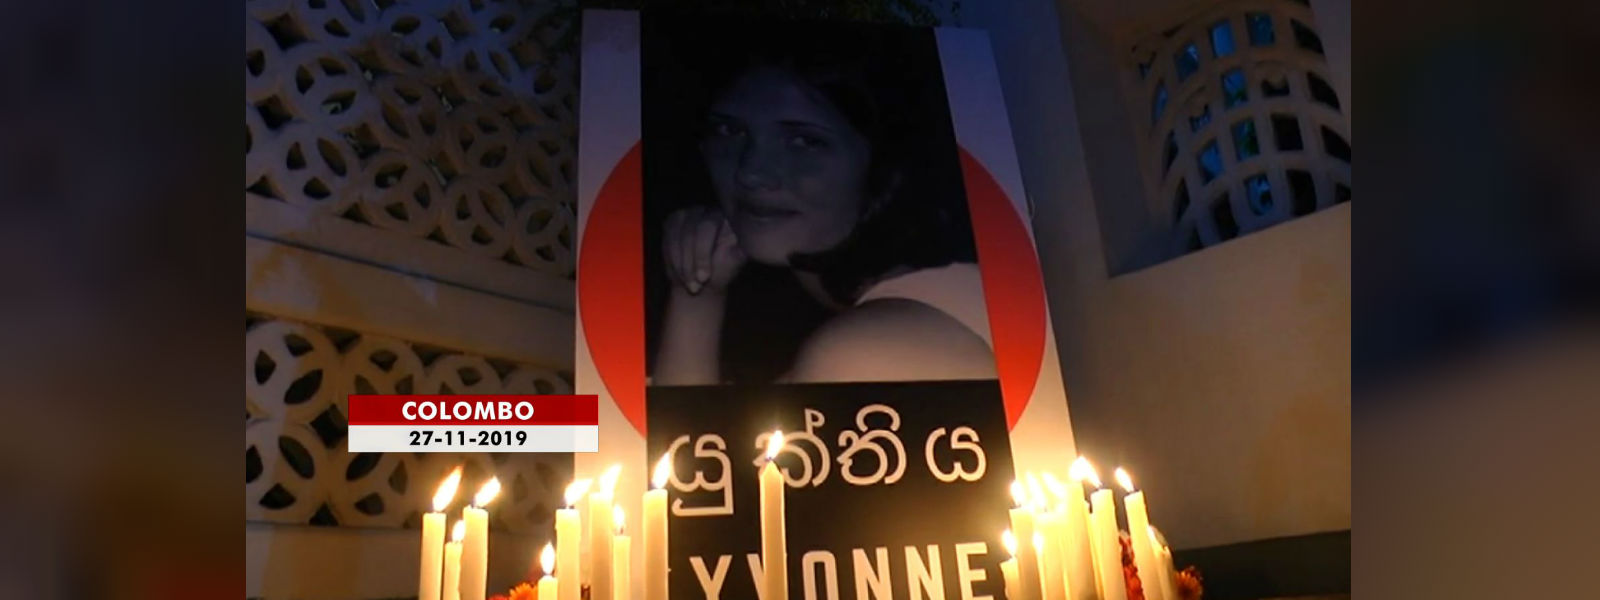 Candlelight vigil in memory of Yvonne Jonsson